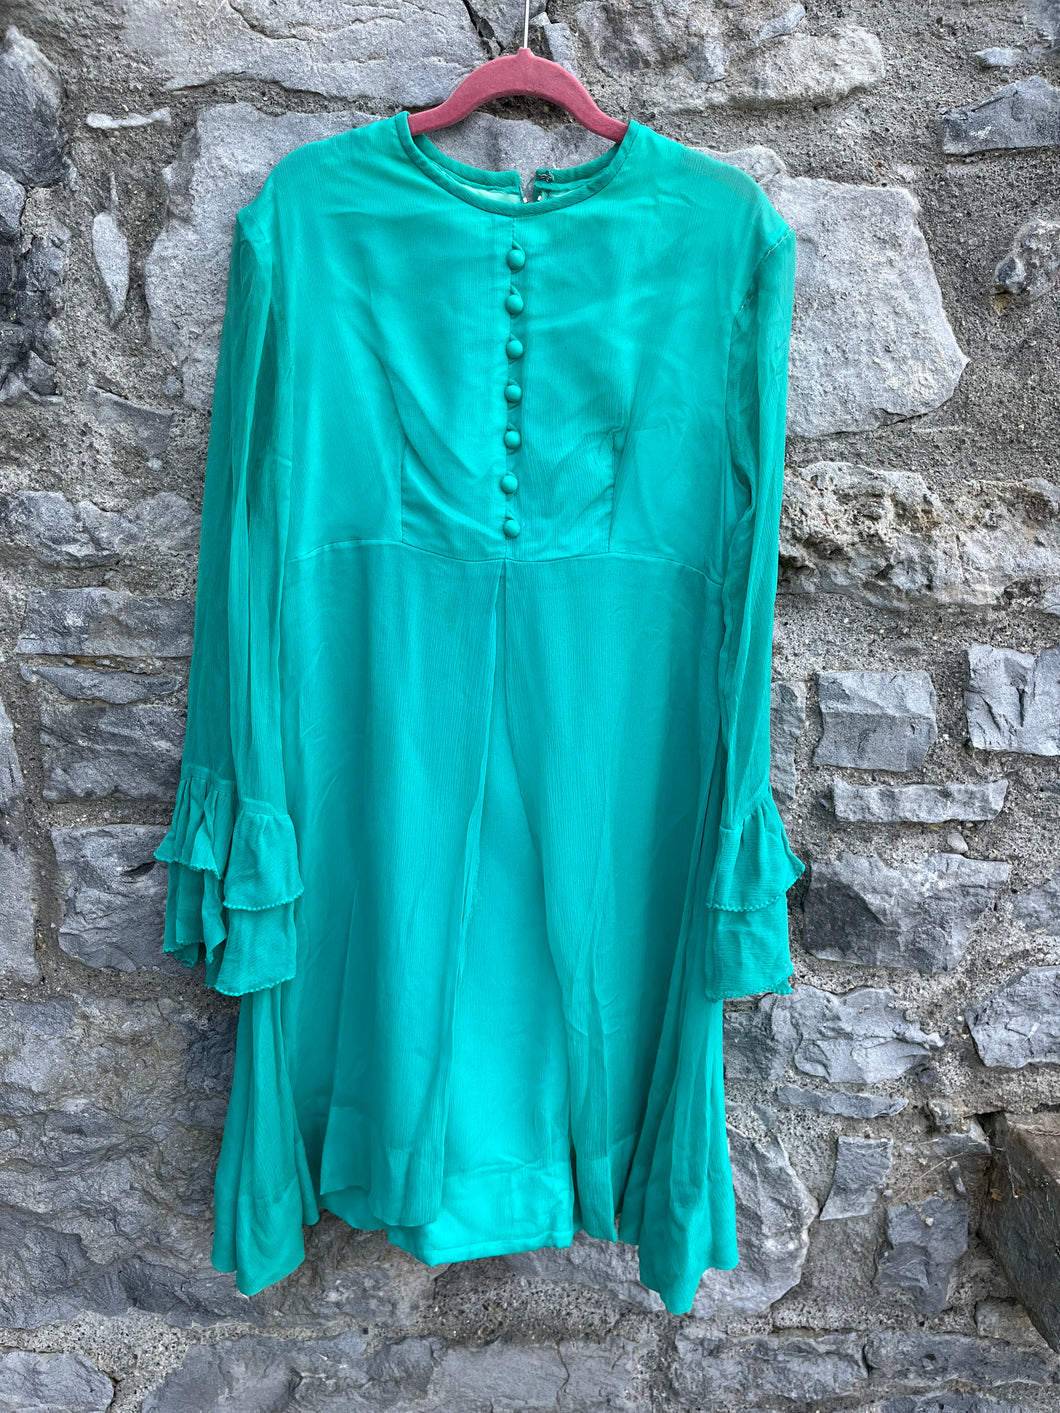 70s green dress uk 4